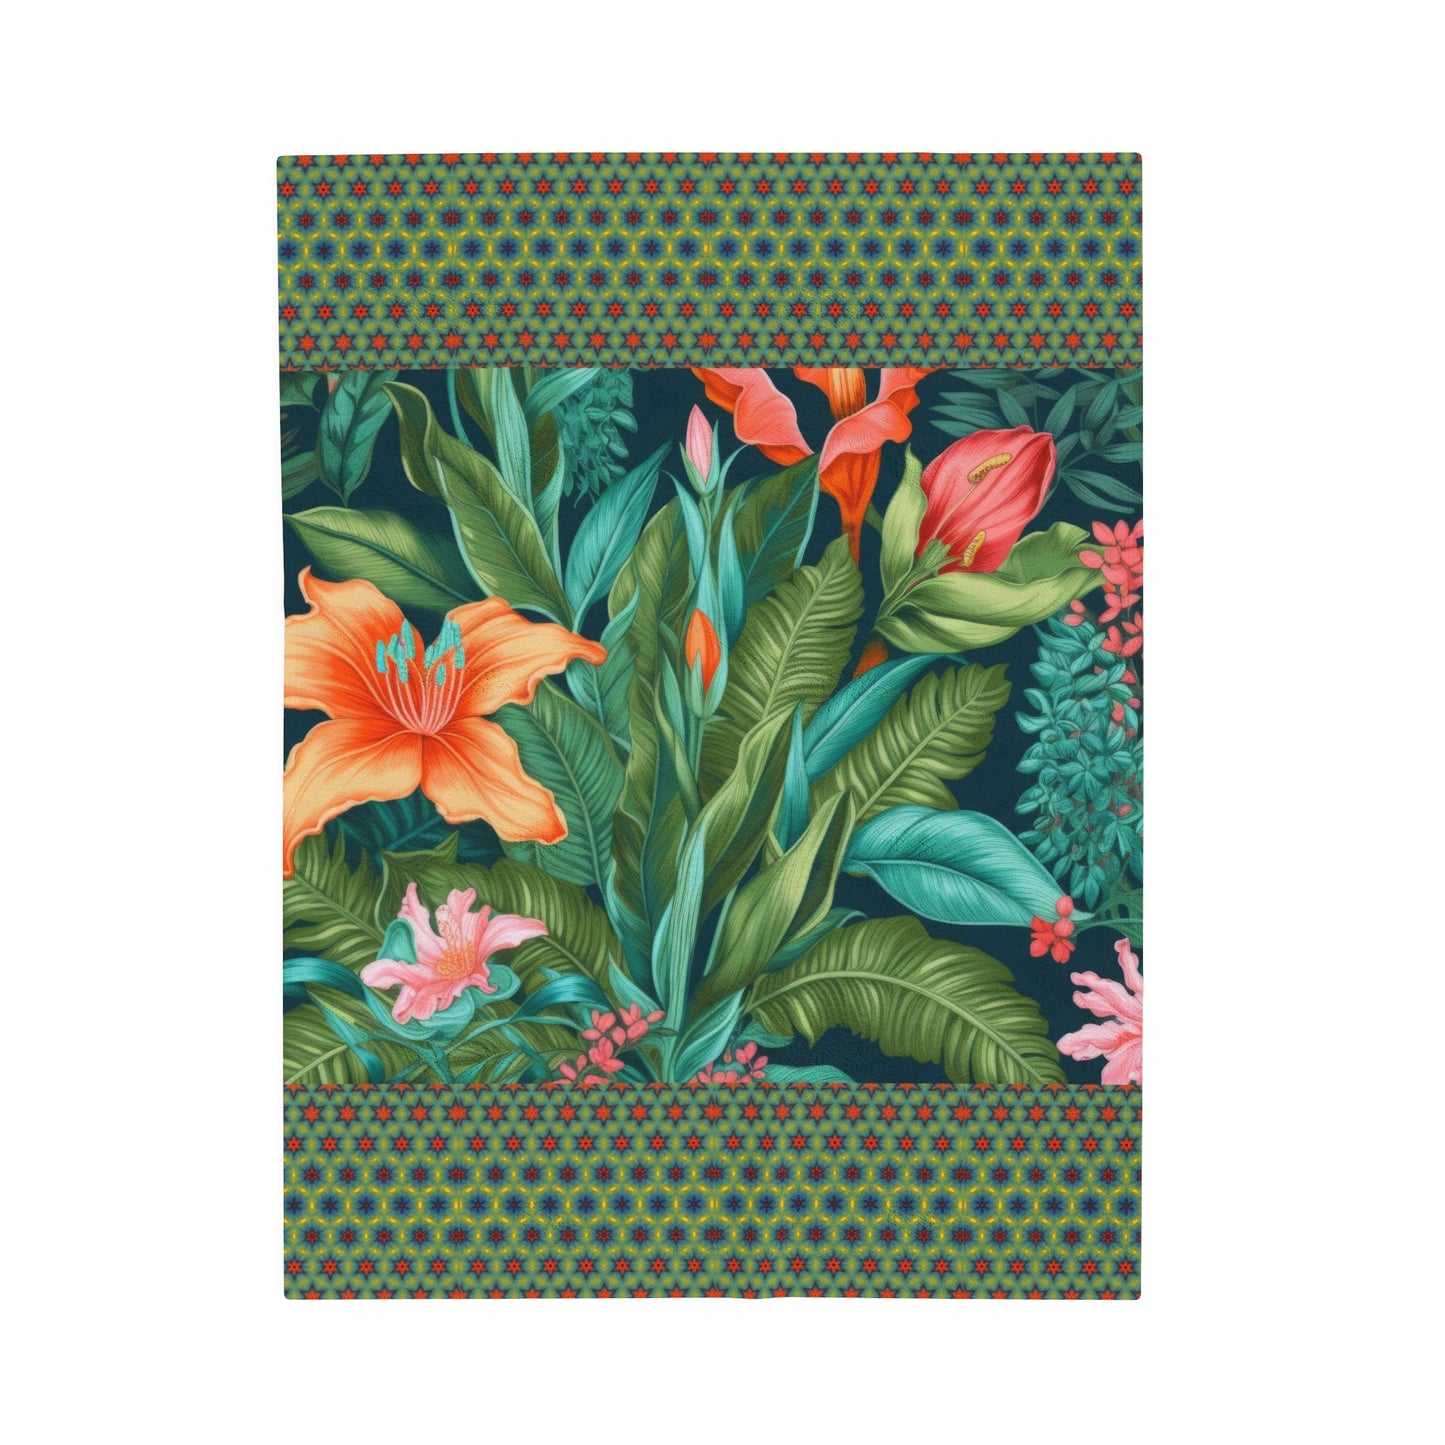 Exotic Flowers & Patterns Throw Blanket